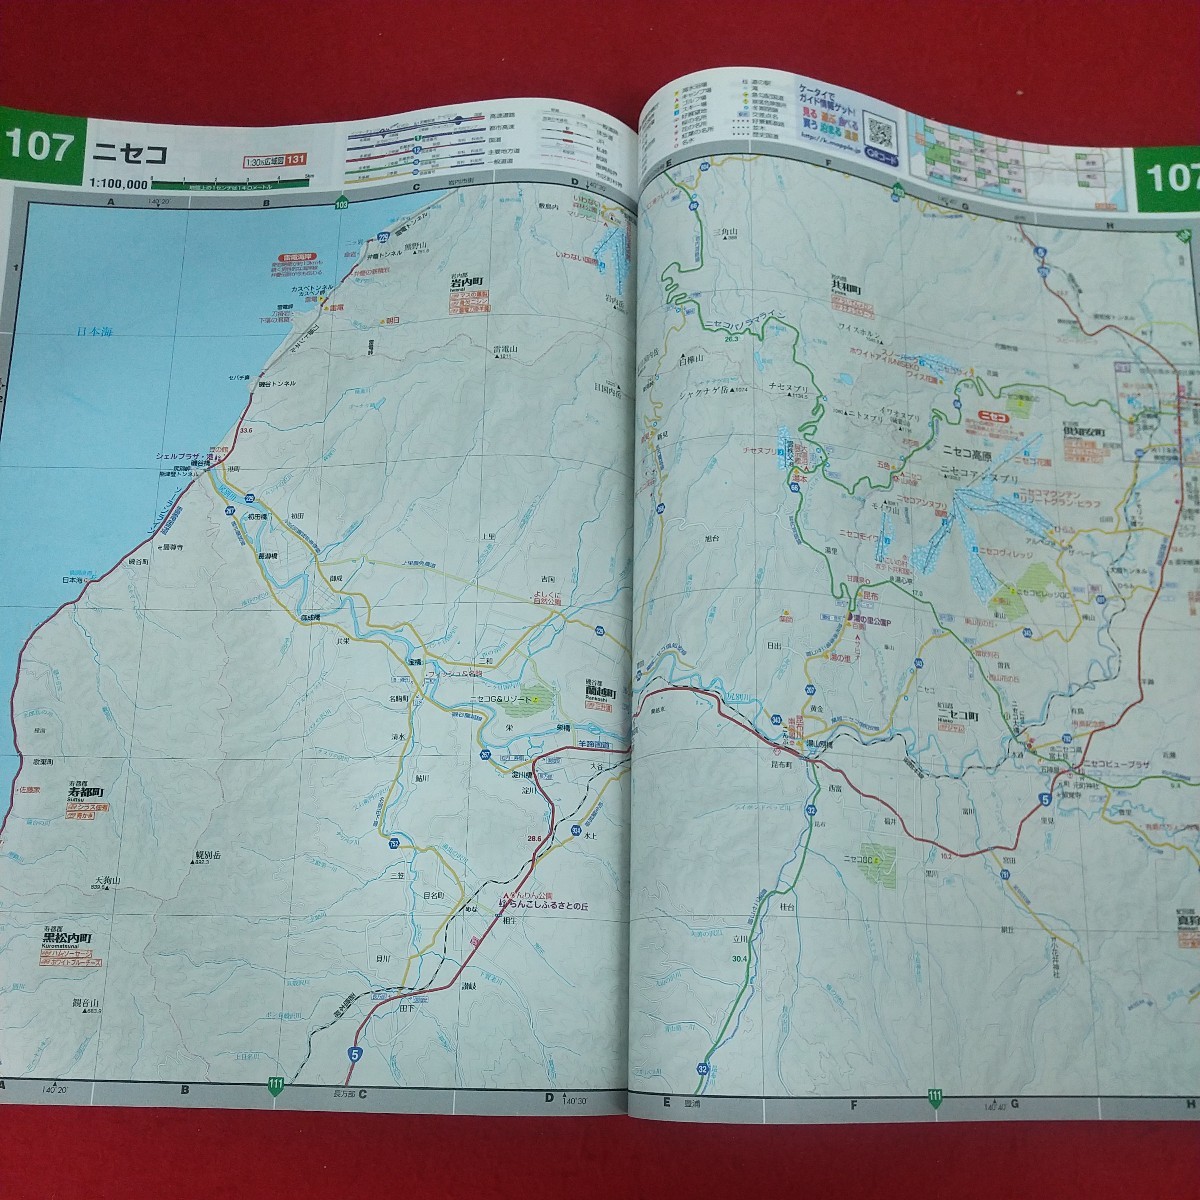 d-409*10 super Mapple Hokkaido карта дорог Sapporo * маленький .* Asahikawa * Obihiro * Кусиро город * Hakodate 2013 год 3 версия 9. выпуск . документ фирма блок название .. объект ..